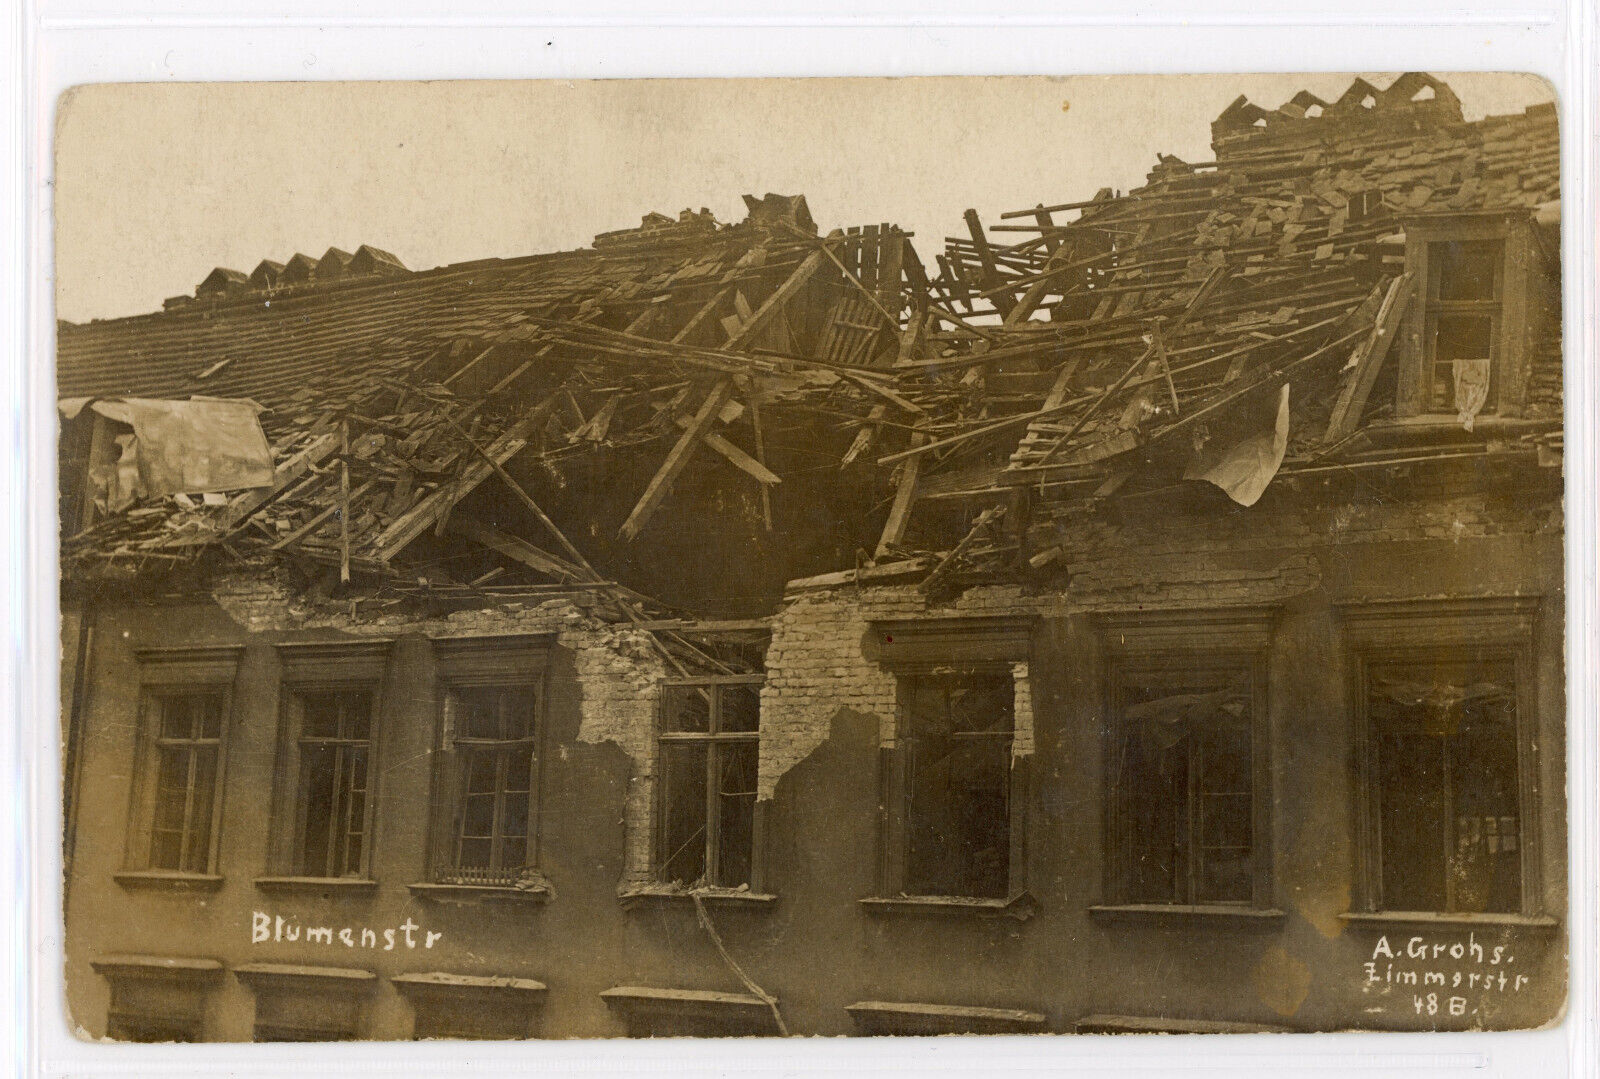 Blumestrasse, Bomb Damage, WWI?, Berlin, Germany RPPC vintage postcard